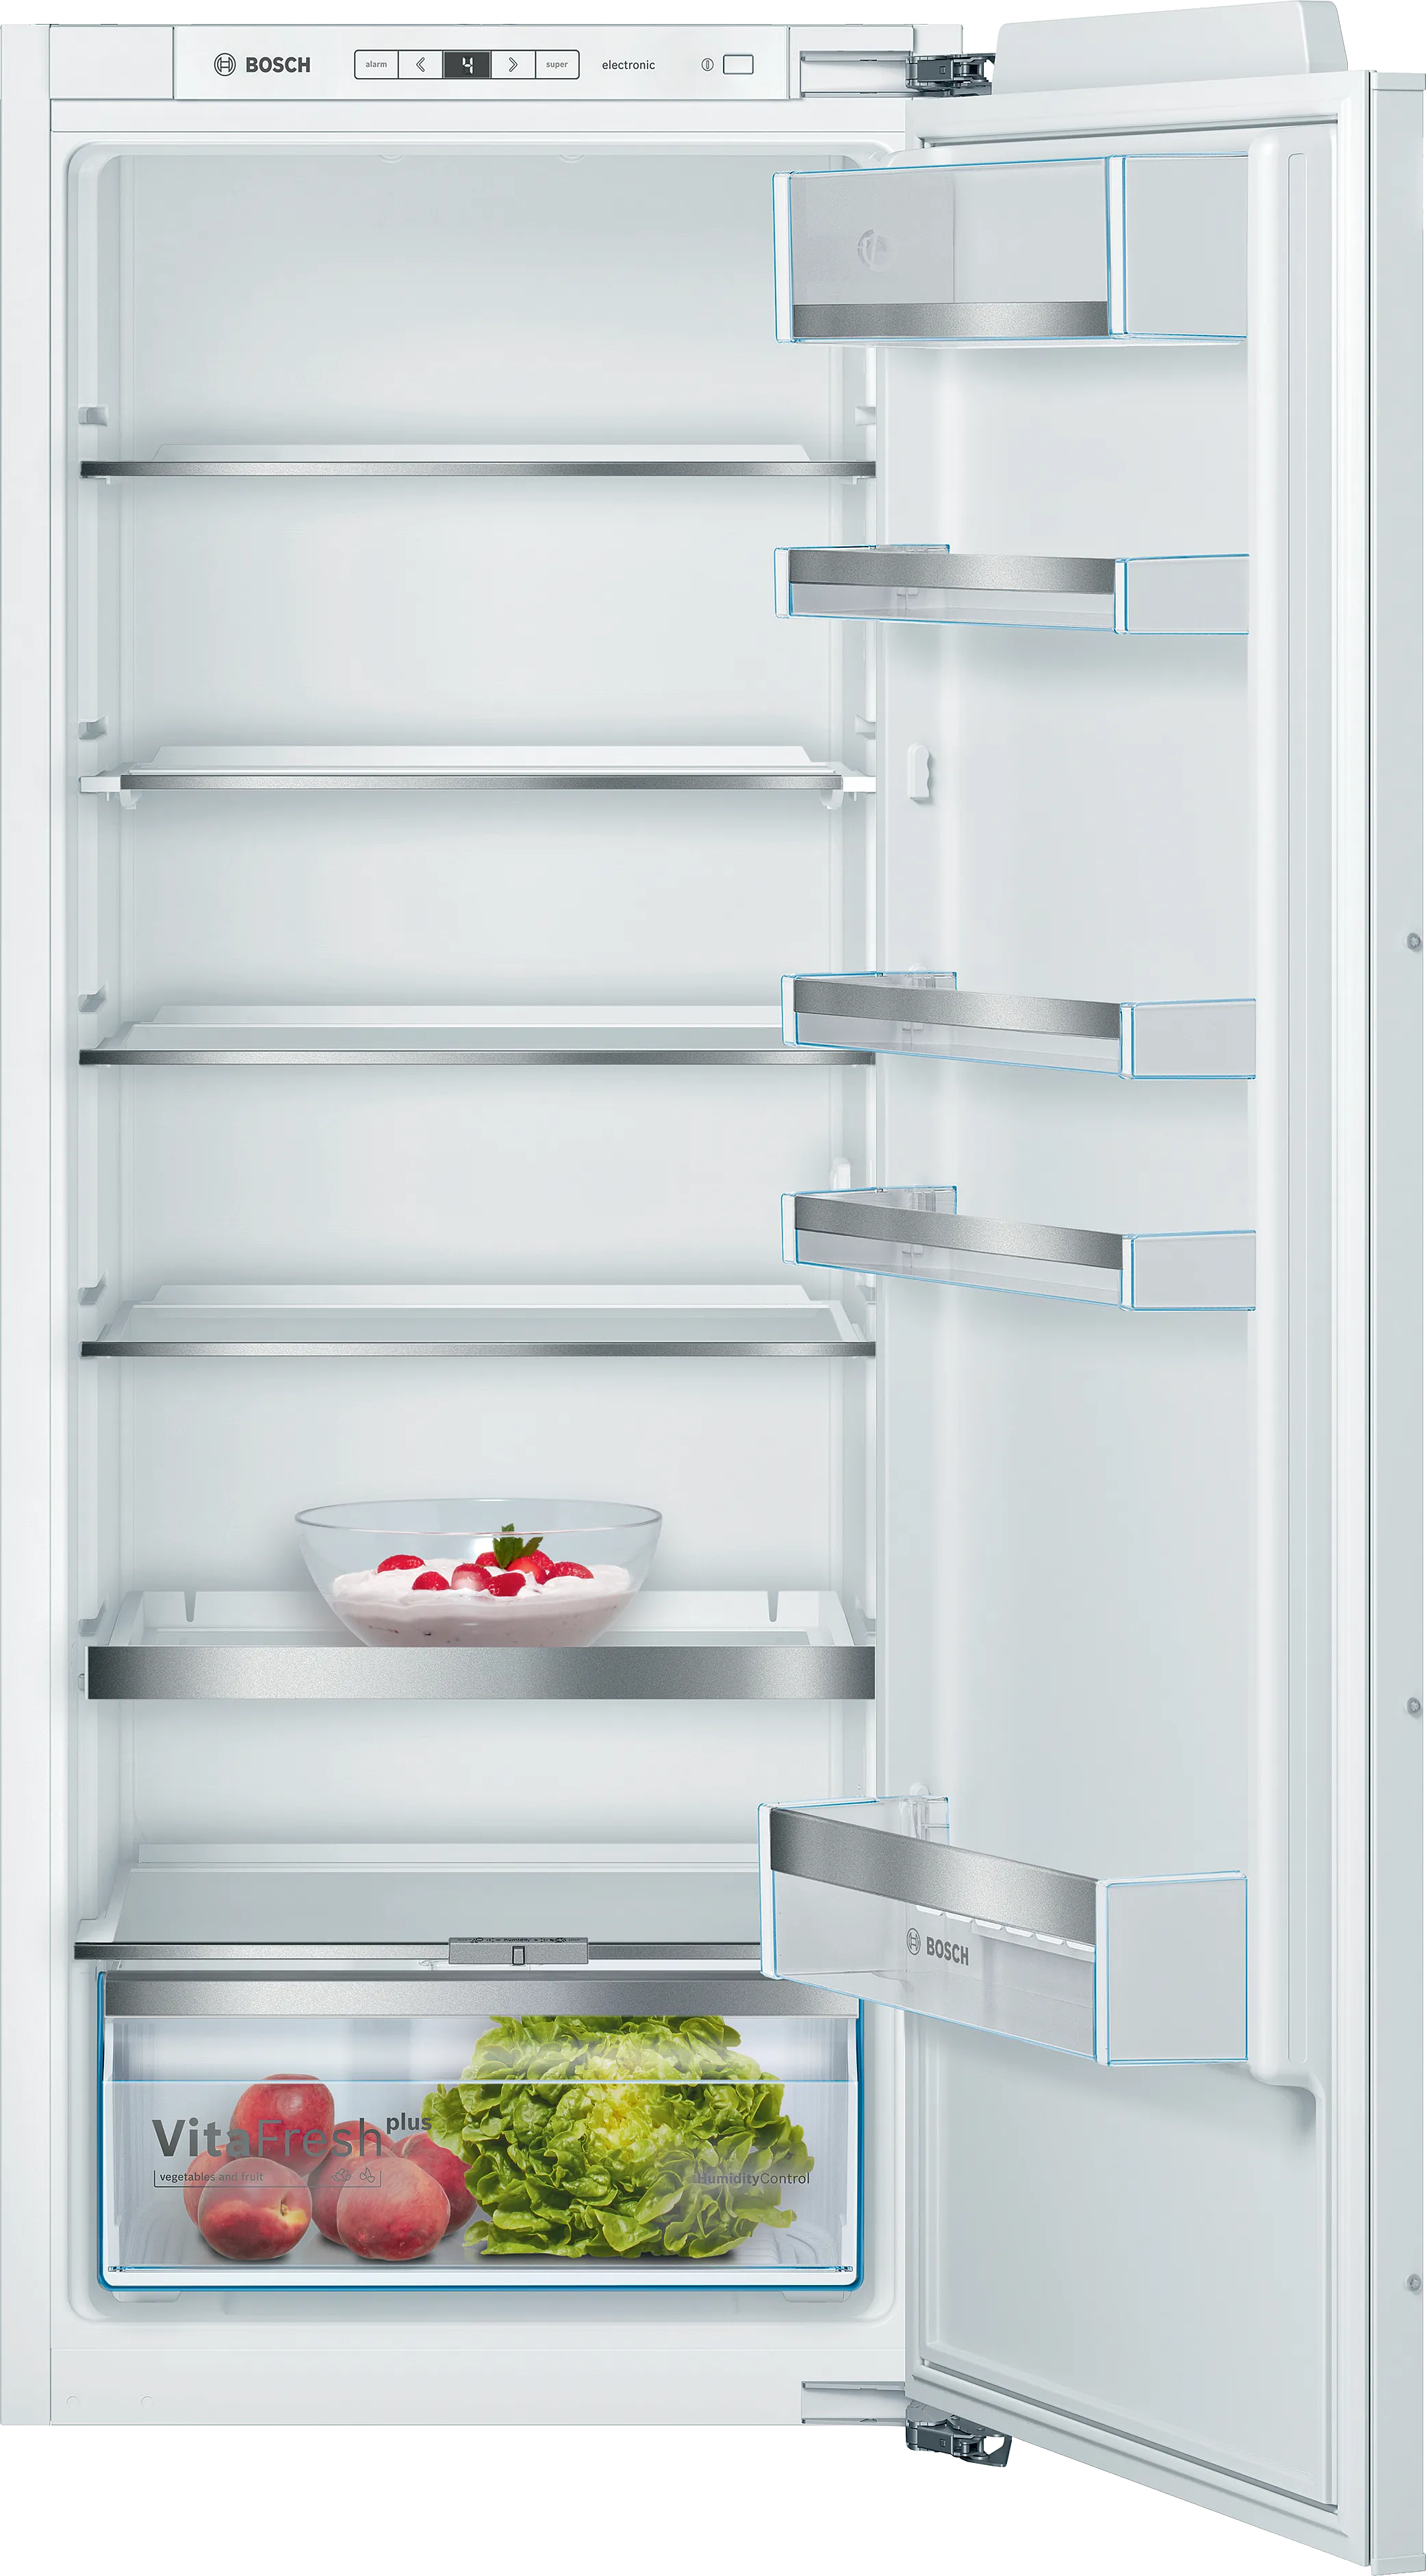 Series 6 built-in fridge 140 x 56 cm flat hinge 